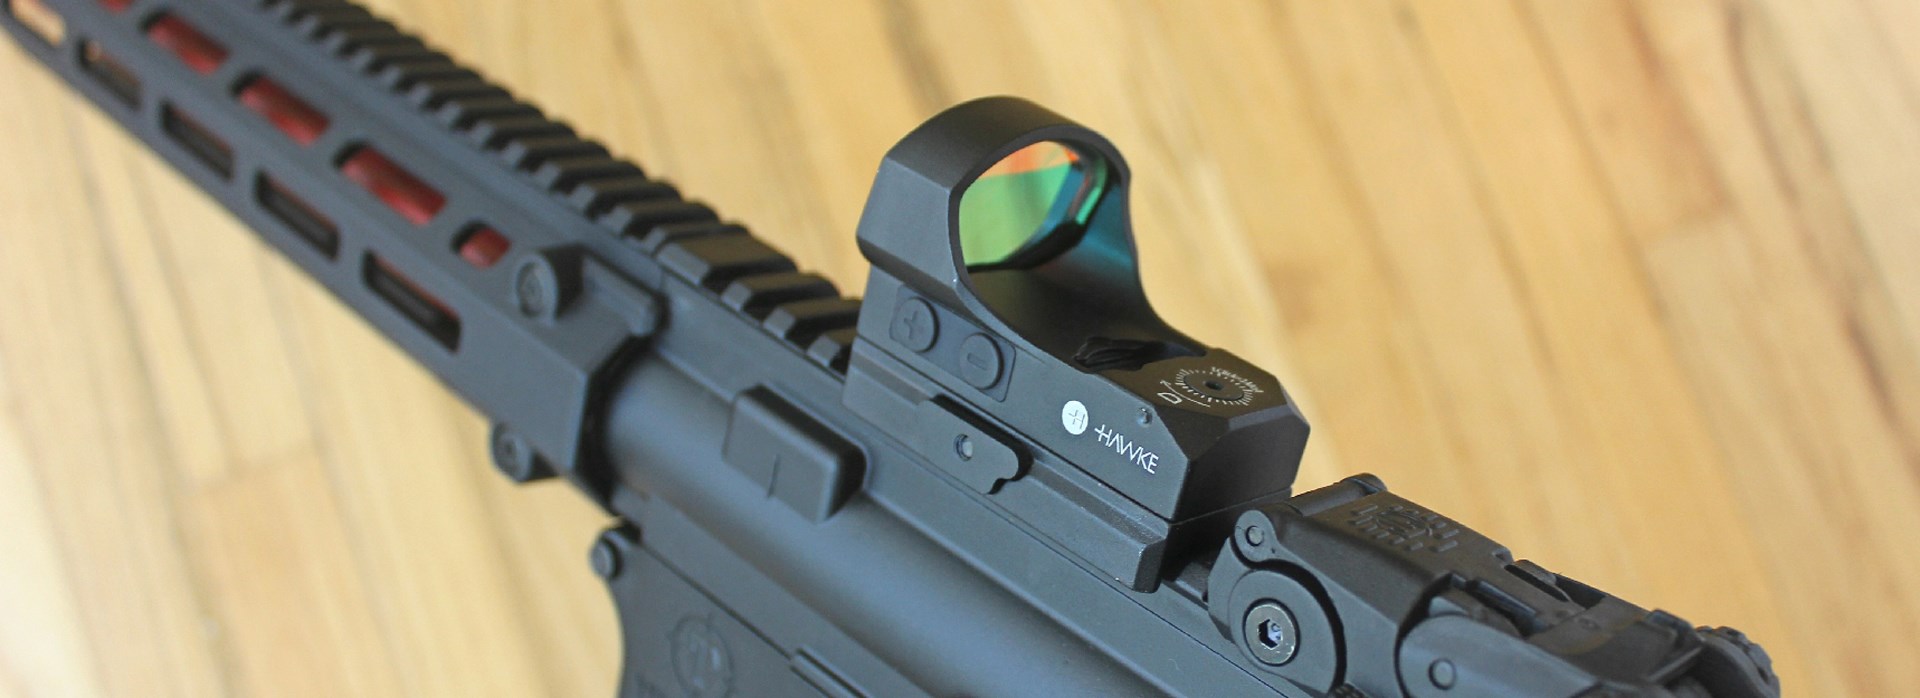 Hawke red-dot optic mounted on AR-15 Picatinny rail receiver gun rifle